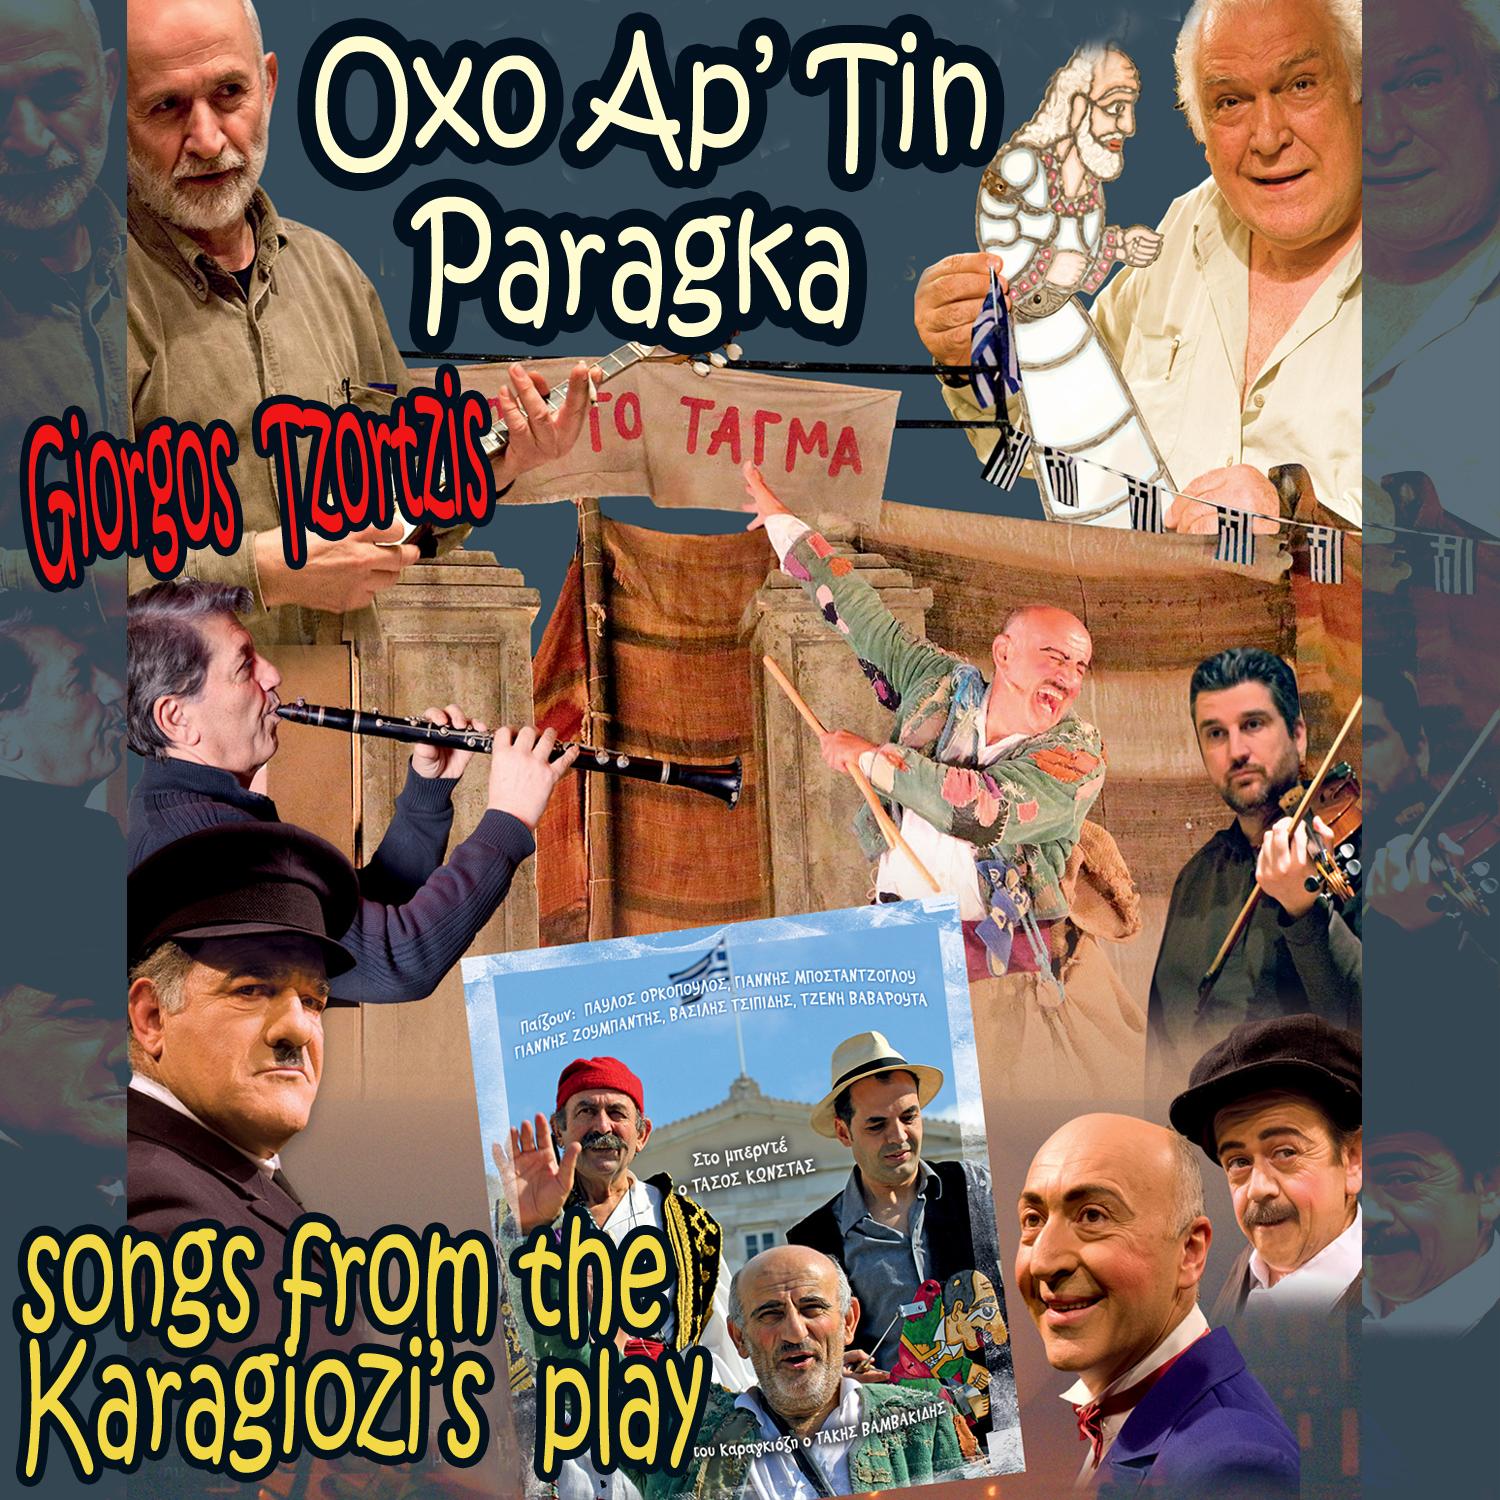 Oxo Ap' Tin Paragka (Songs from the Karagiozi's Play)